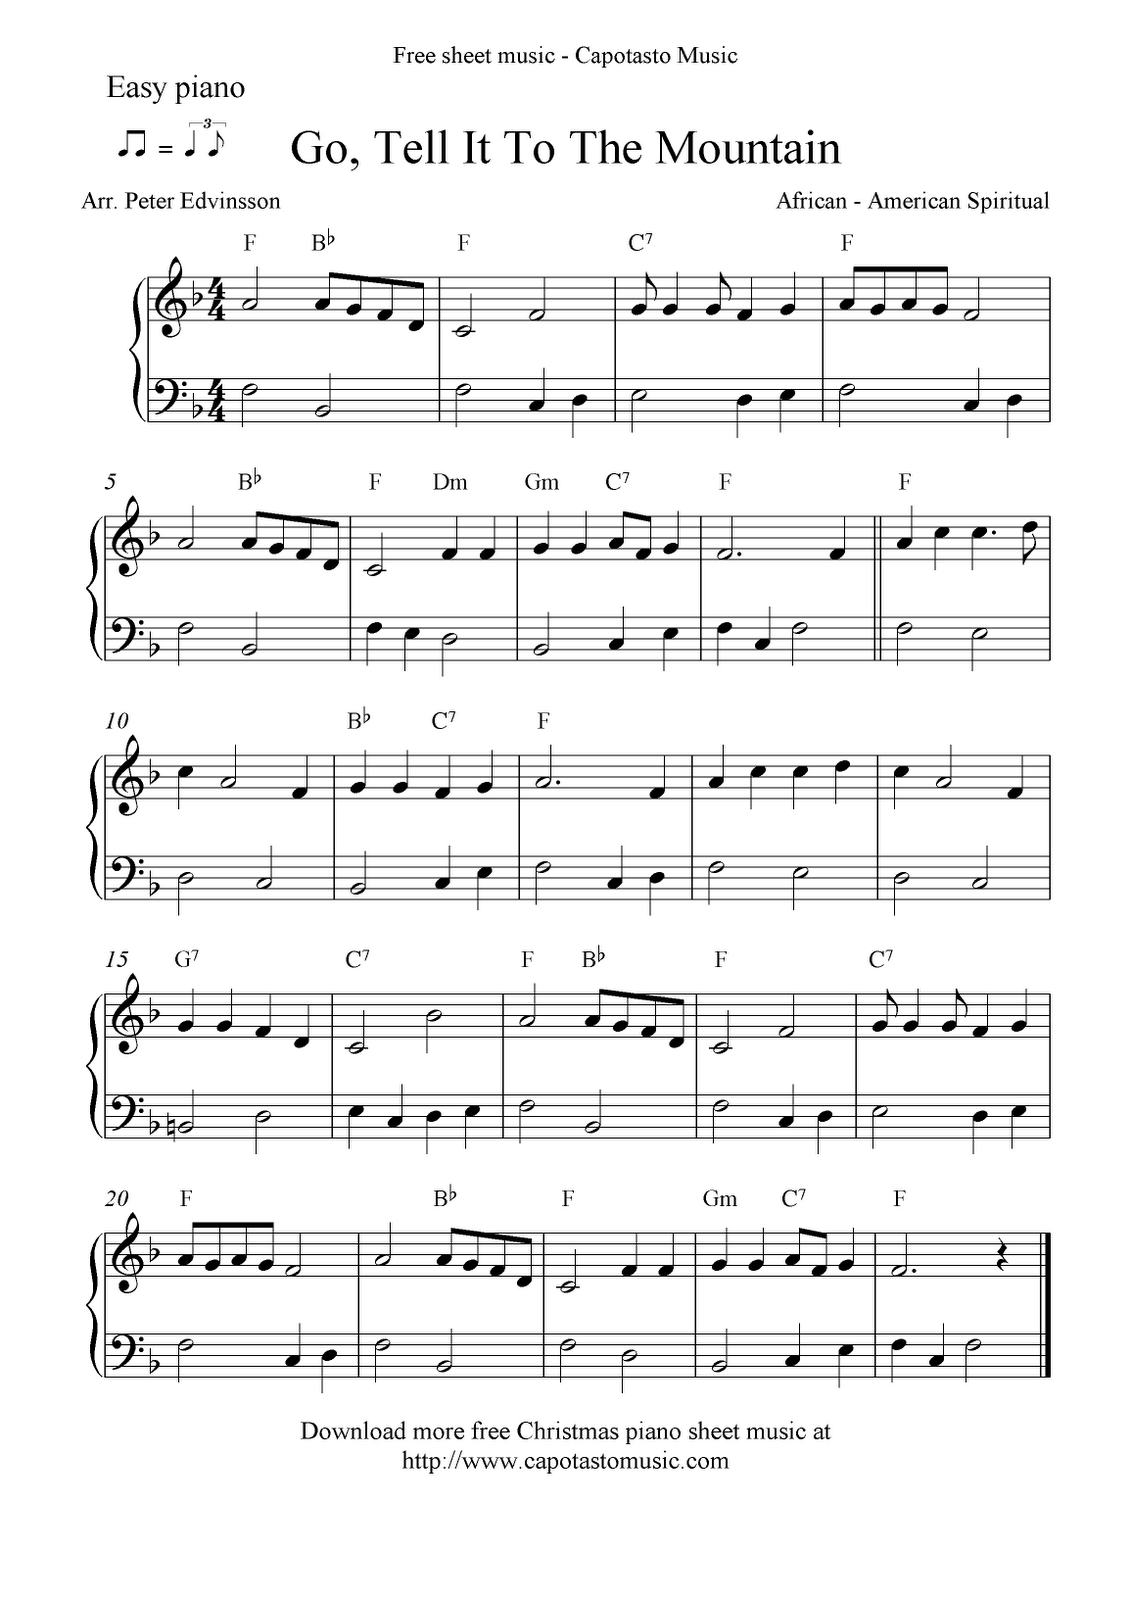 Free Printable Piano Sheet Music | Free Sheet Music Scores: Easy - Free Printable Christmas Music Sheets Piano